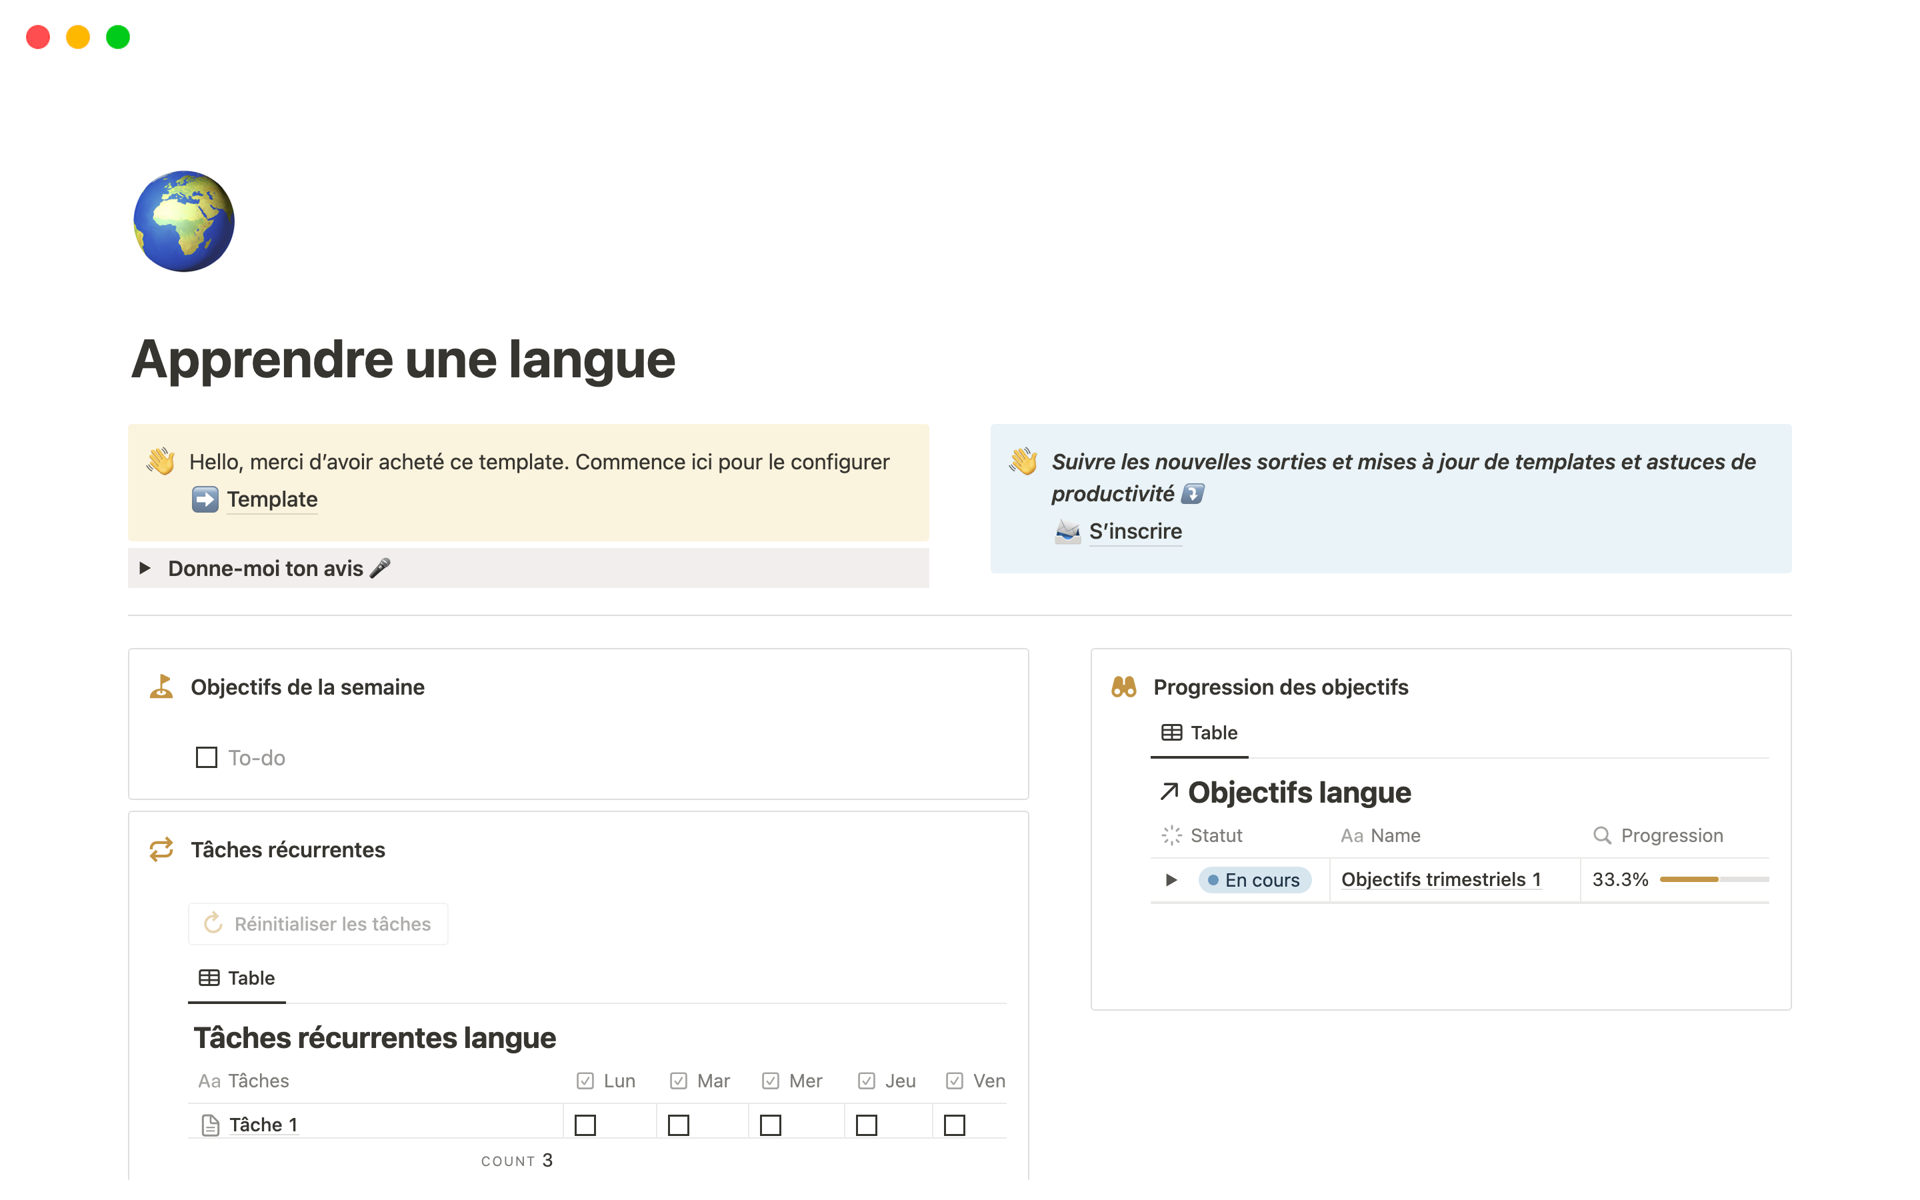 A template preview for Apprendre une langue